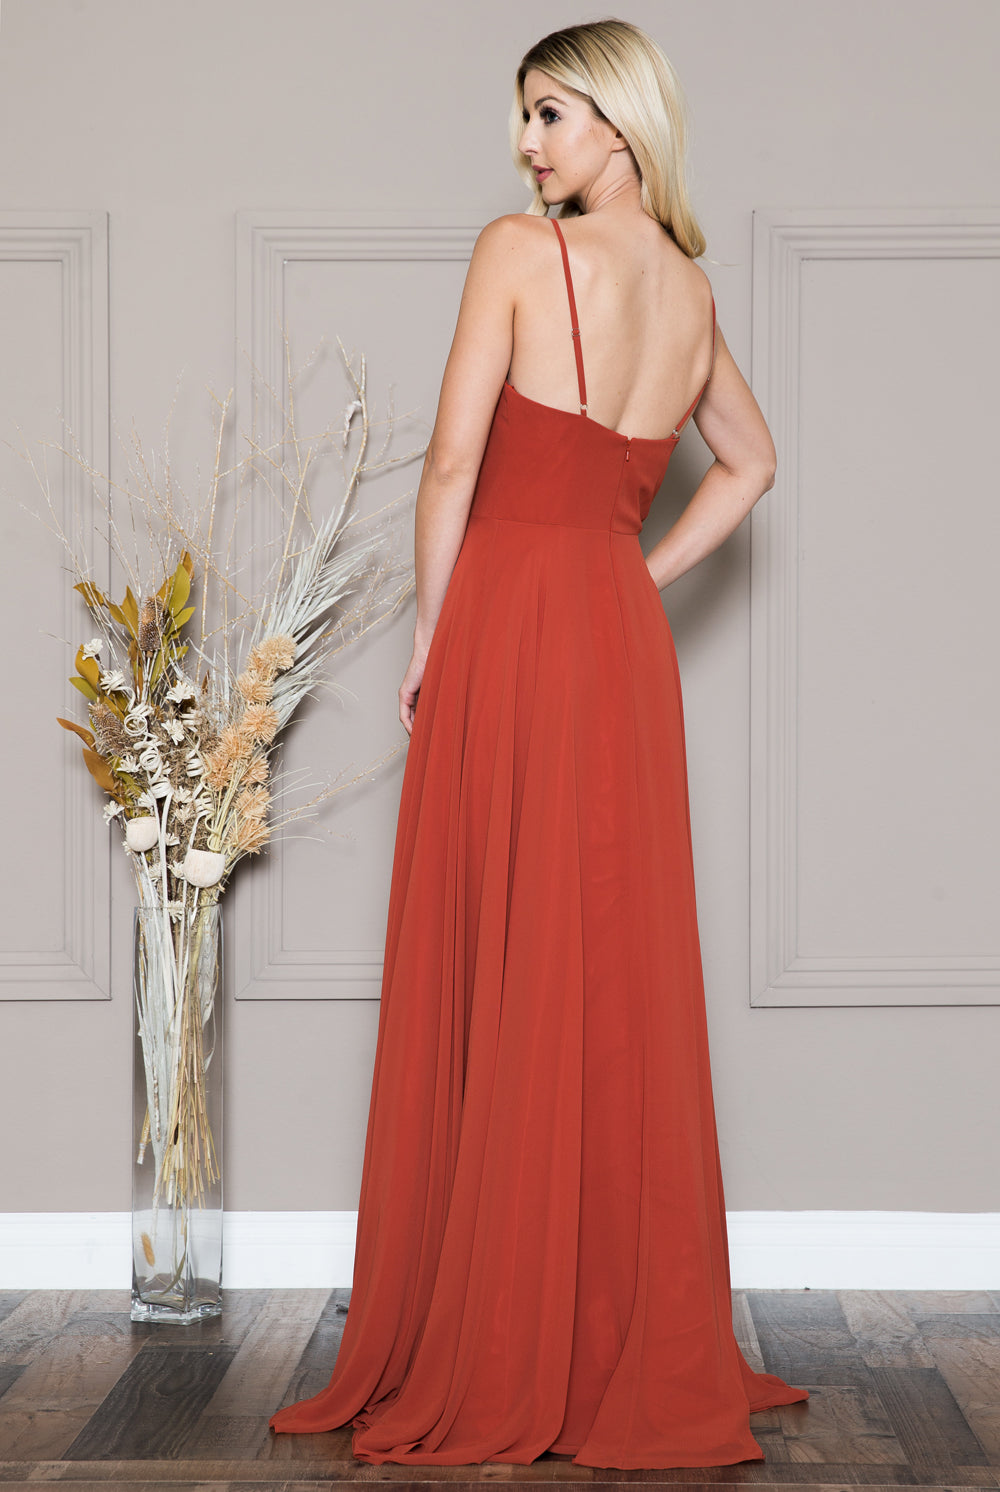 Classic Chiffon A-Line Adjustable Straps Zipper Back Long Prom Dress AC477-Bridesmaid Dress-smcfashion.com